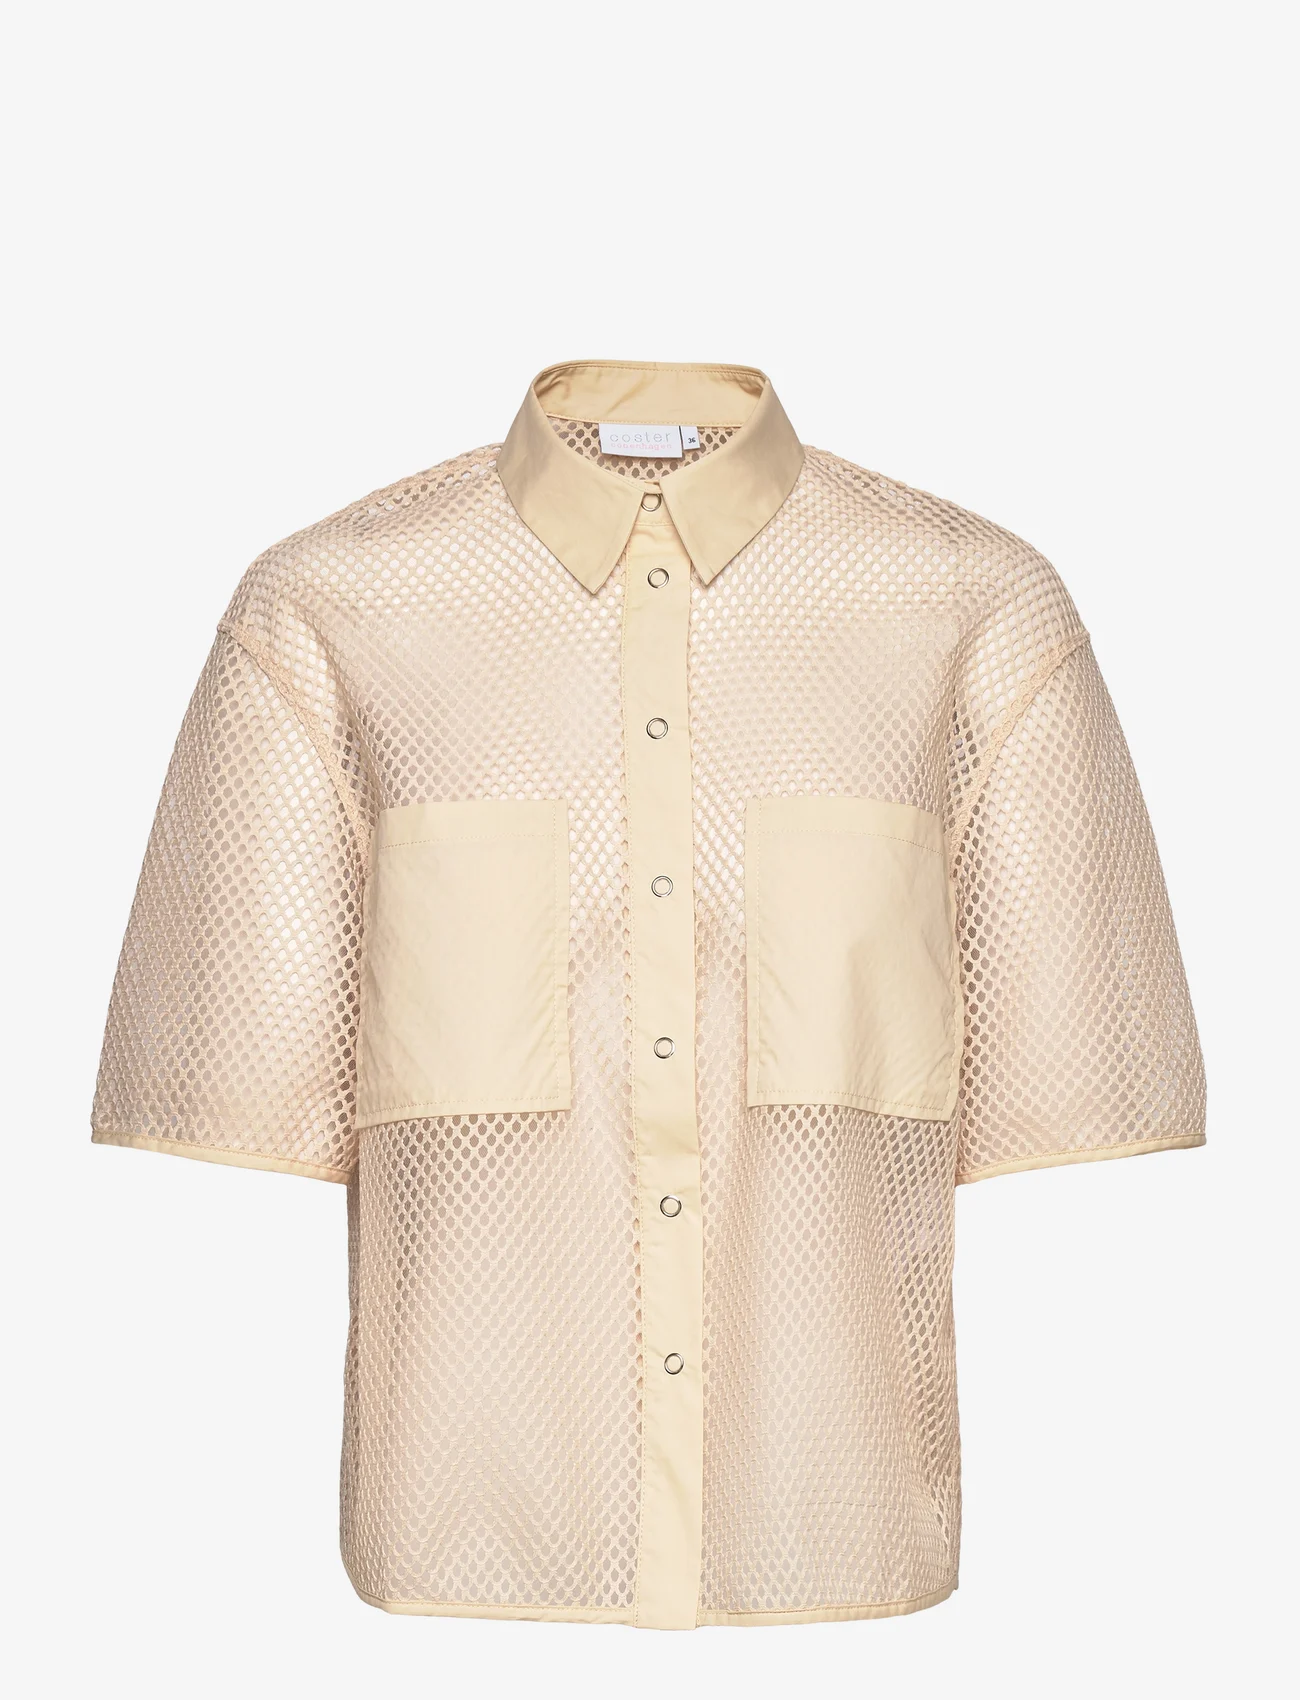 Coster Copenhagen - Mesh shirt - kurzärmlige hemden - vanilla - 0